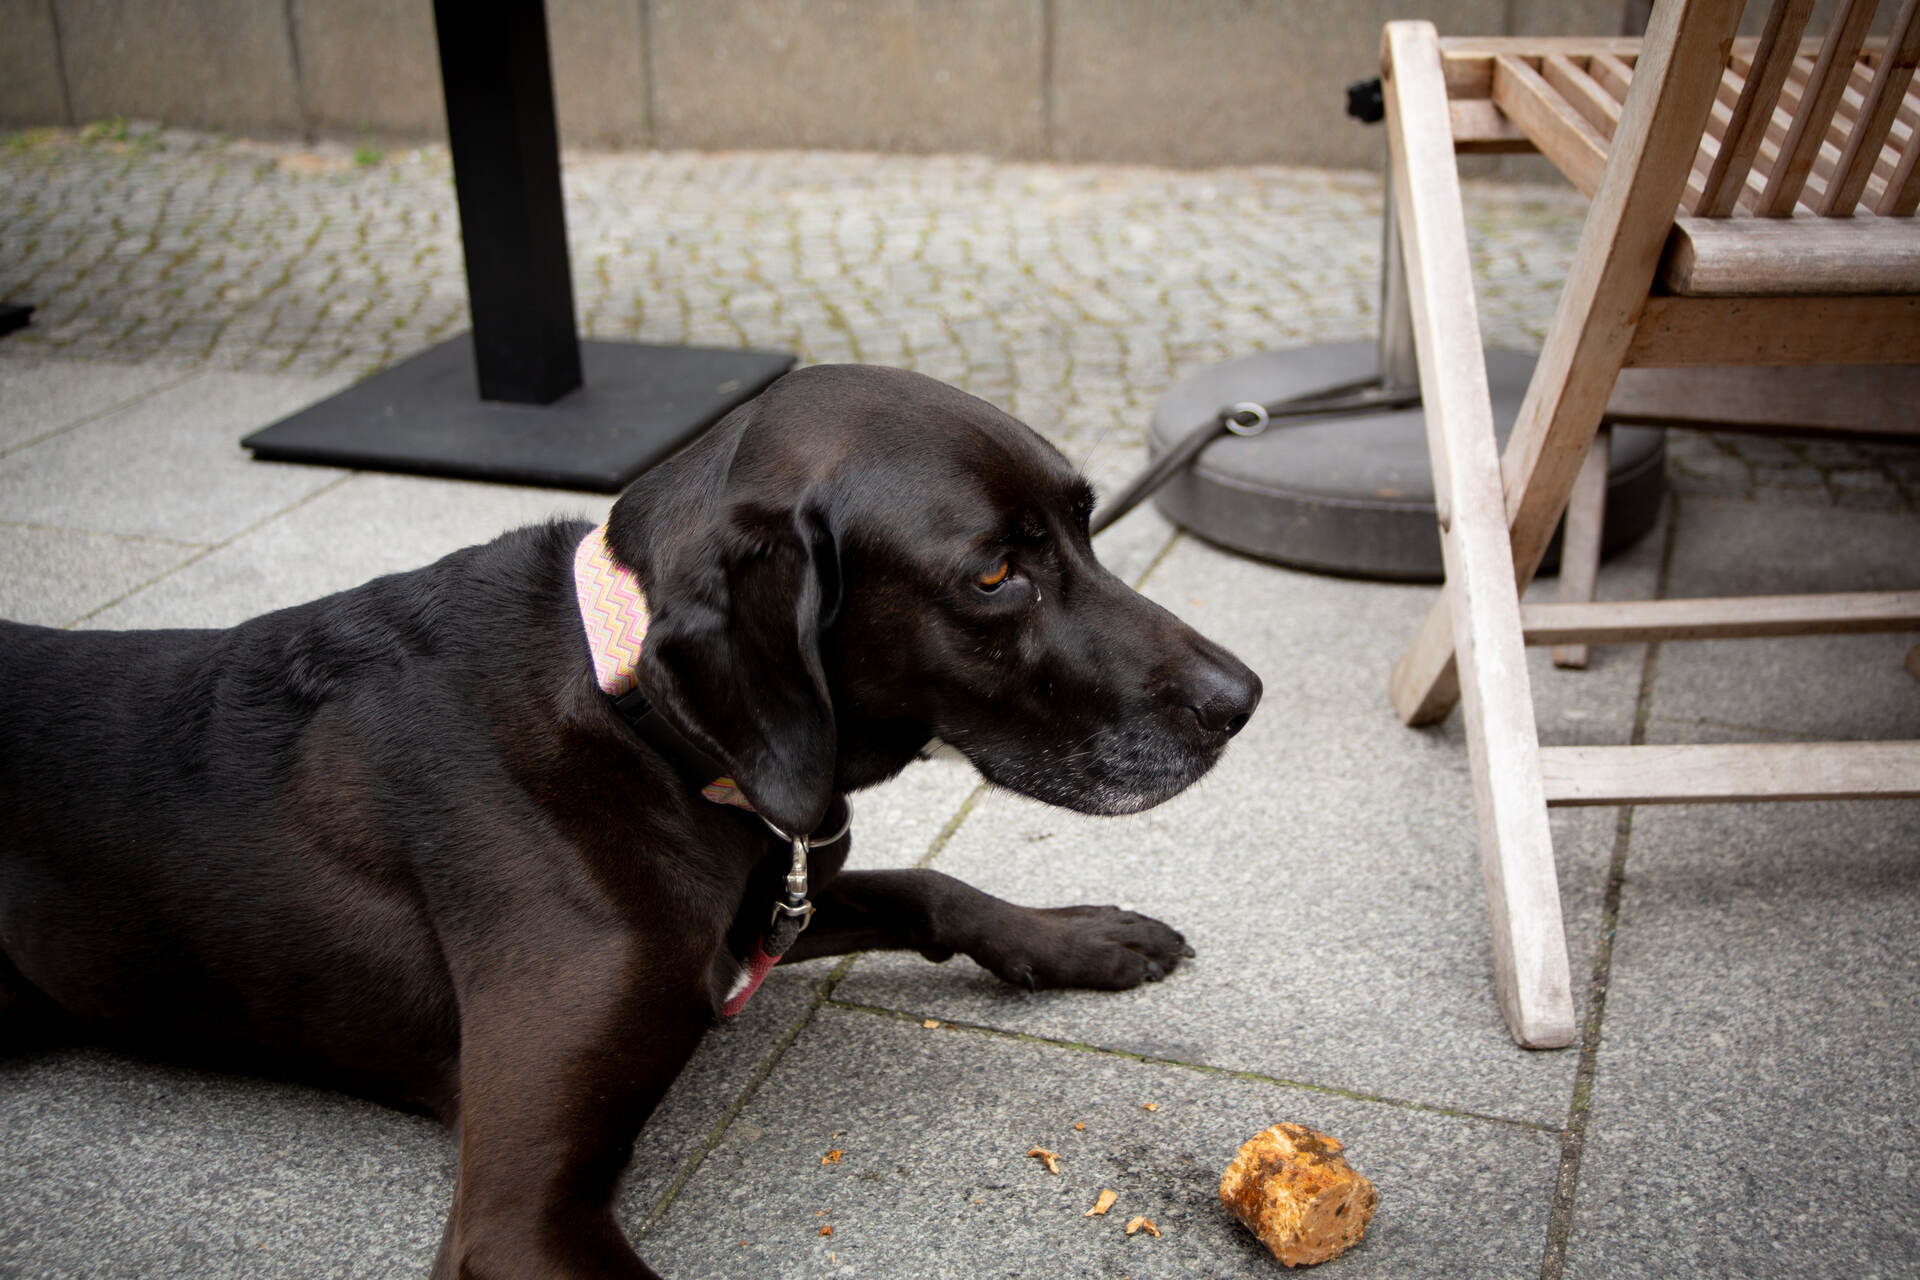 A dog sitting in front of a fallen muffin on a street sidewalk